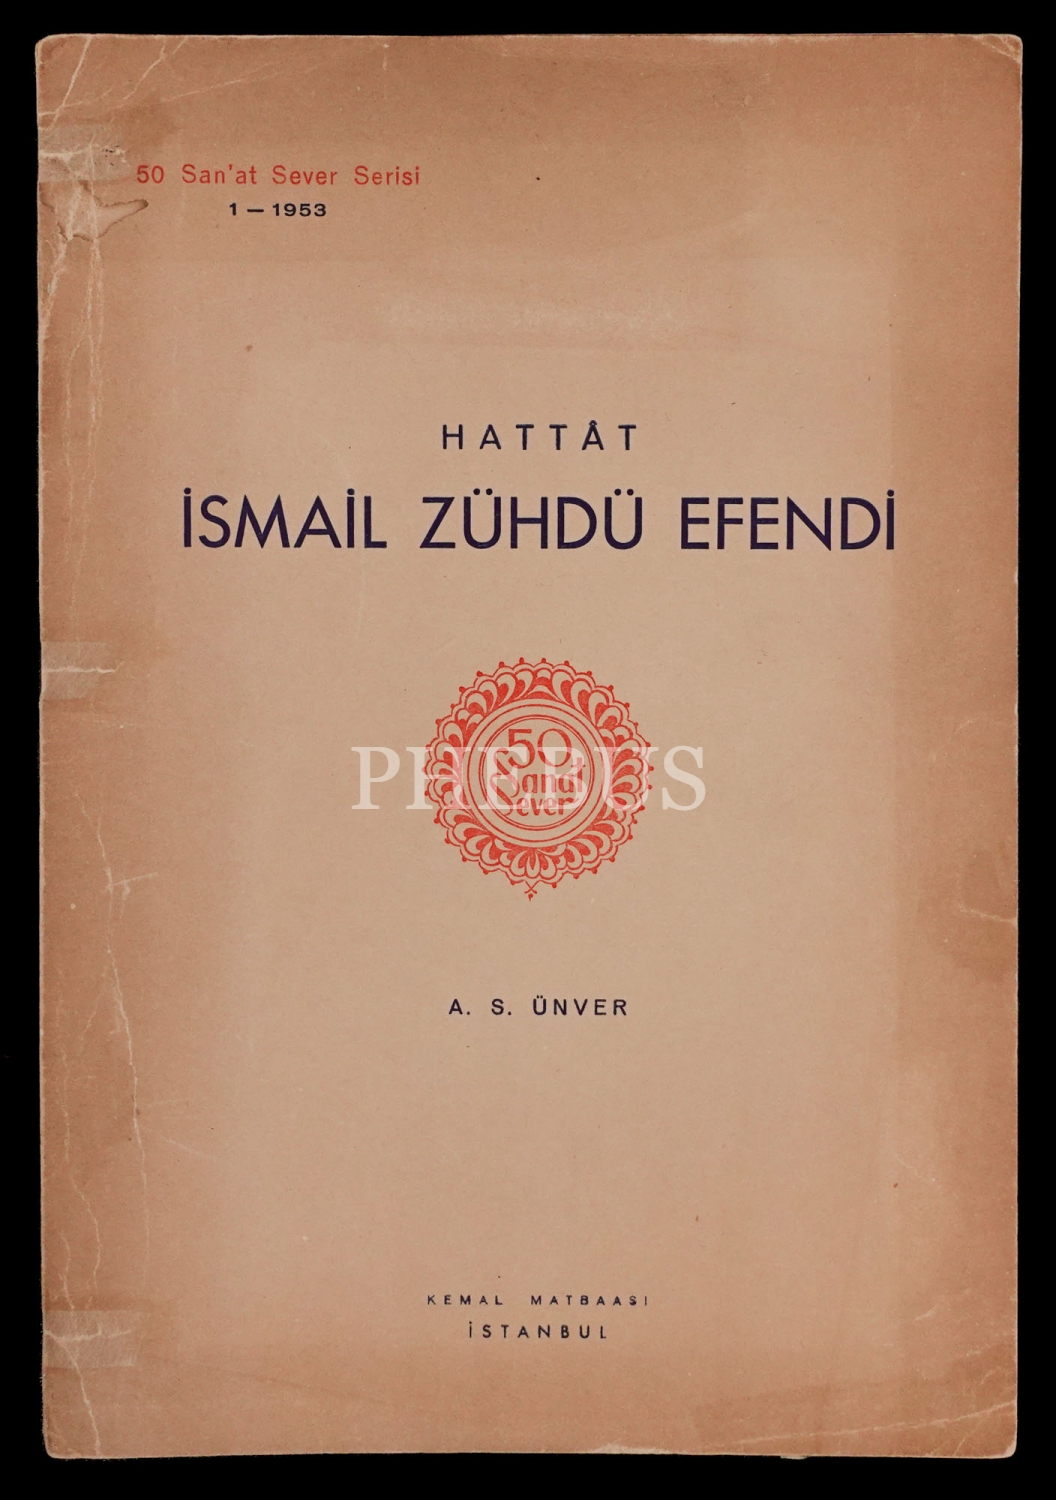 Hattat İsmail Zühdü Efendi, Ahmed Süheyl Ünver, 50 Sanat Sever Serisi 1 numara, 1953, Kemal Matbaası, 2 sayfa, 17x24 cm...